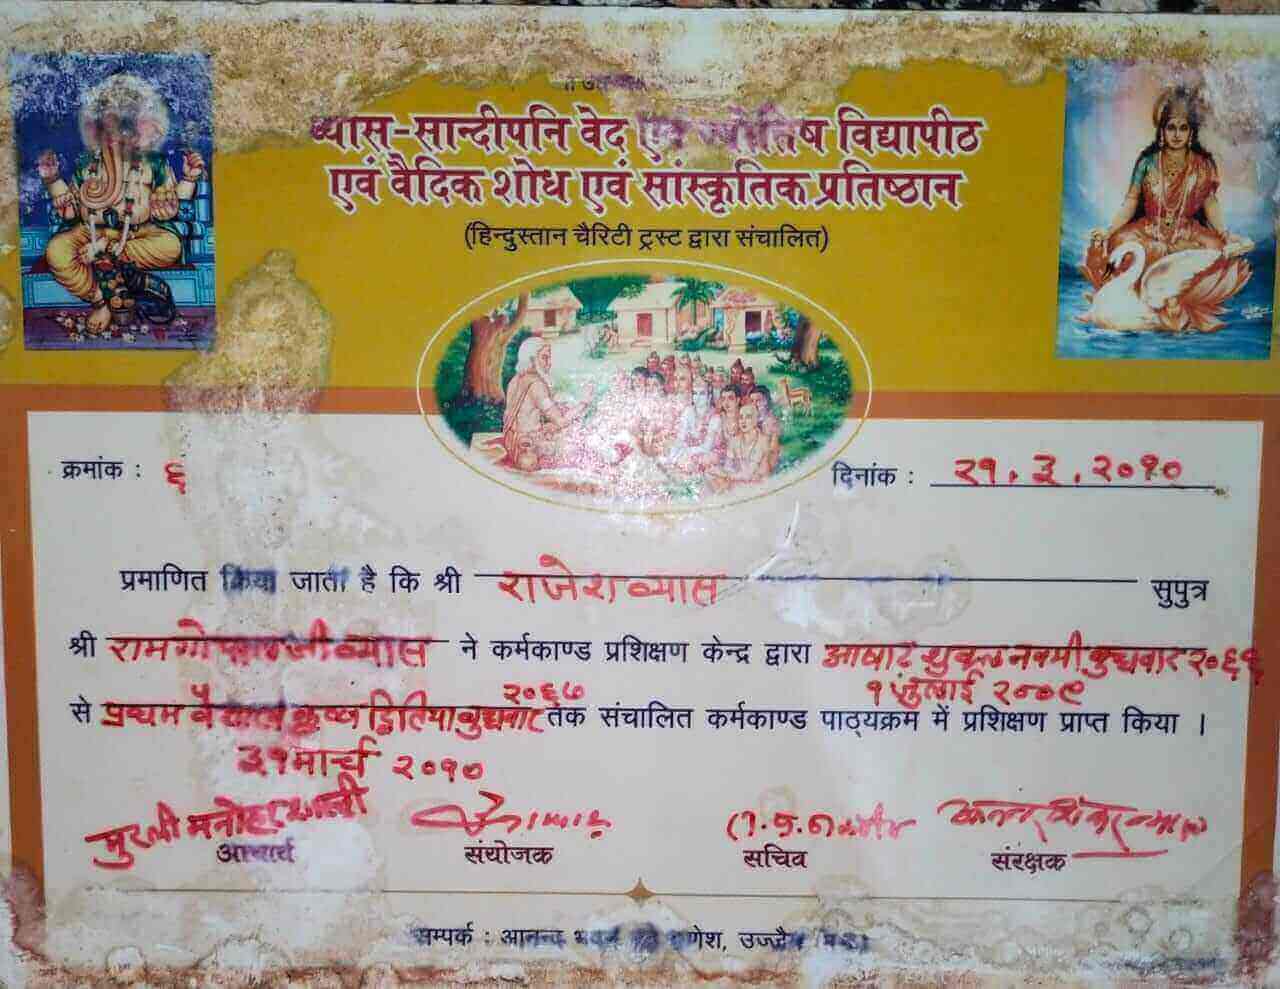 Kaalsarp Dosh Puja in Ujjain, Mangal Dosh Pujan